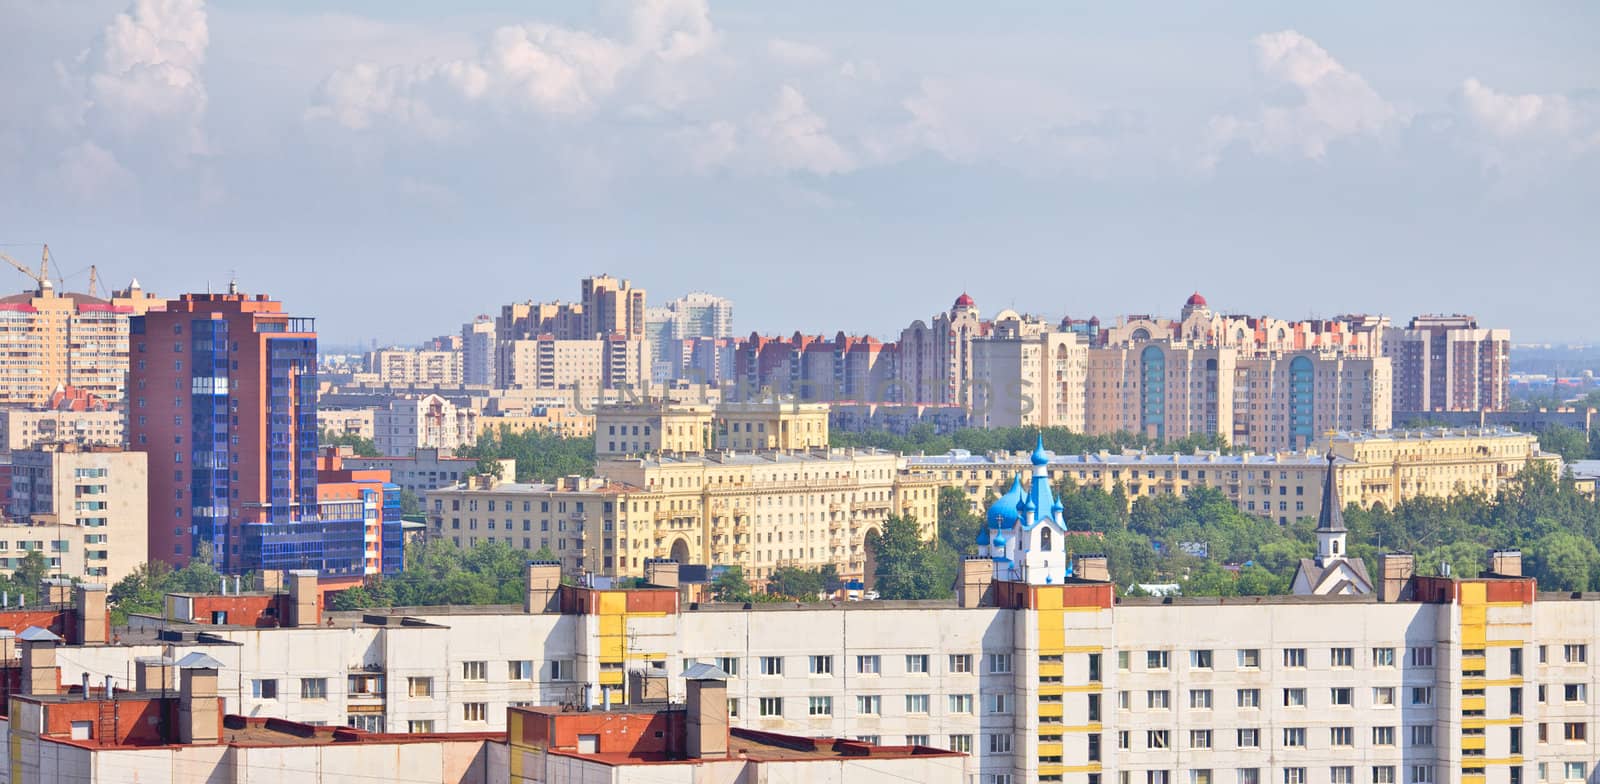 City Aerial View by petr_malyshev